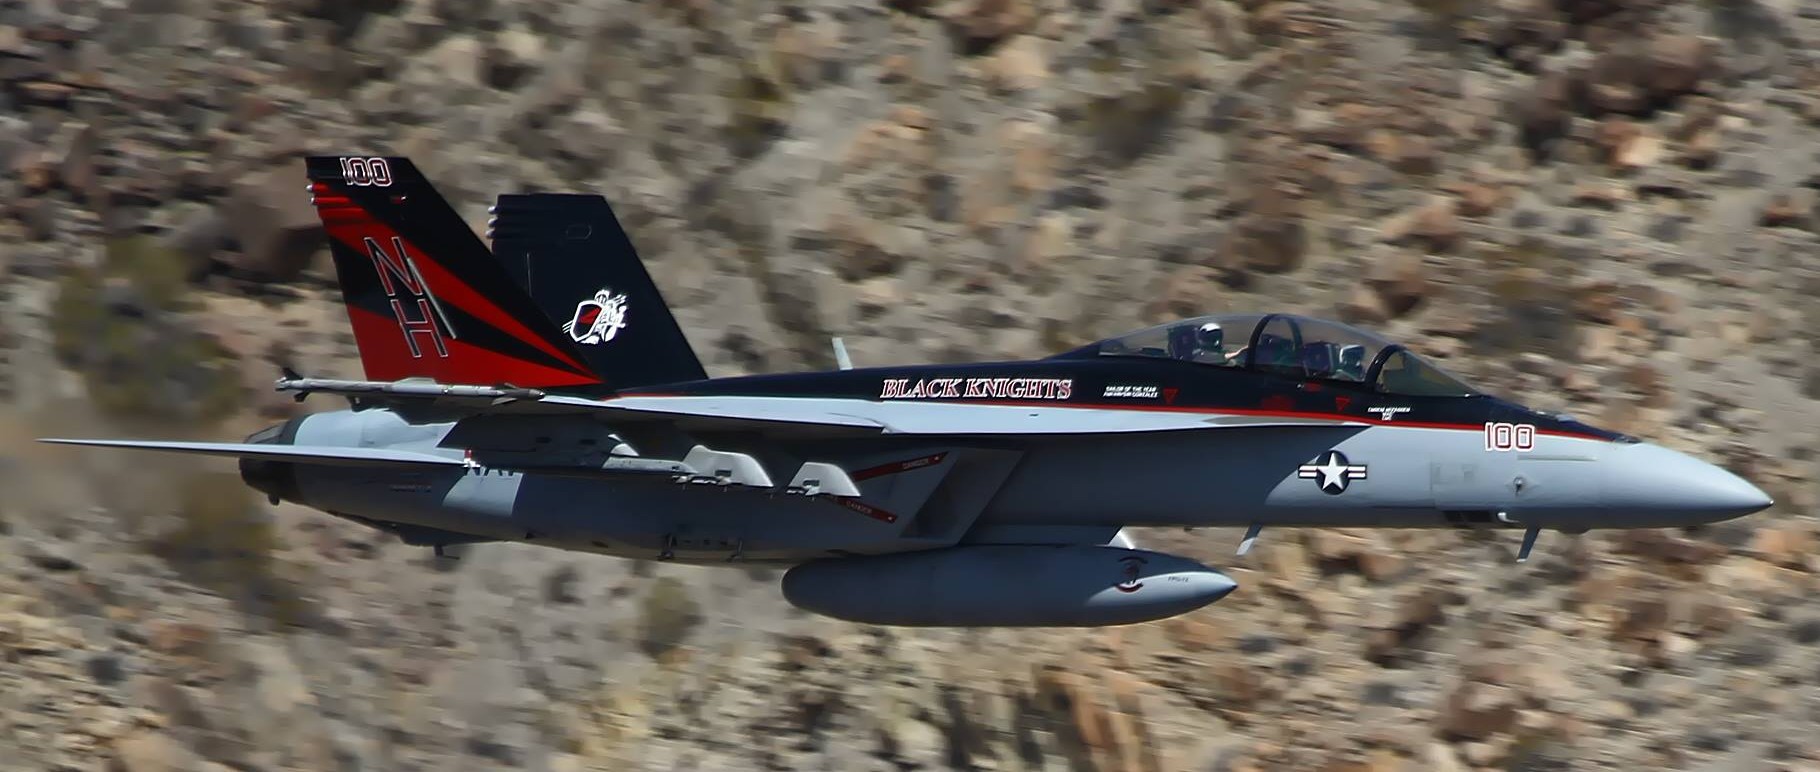 vfa-154 black knights strike fighter squadron navy f/a-18f super hornet 133